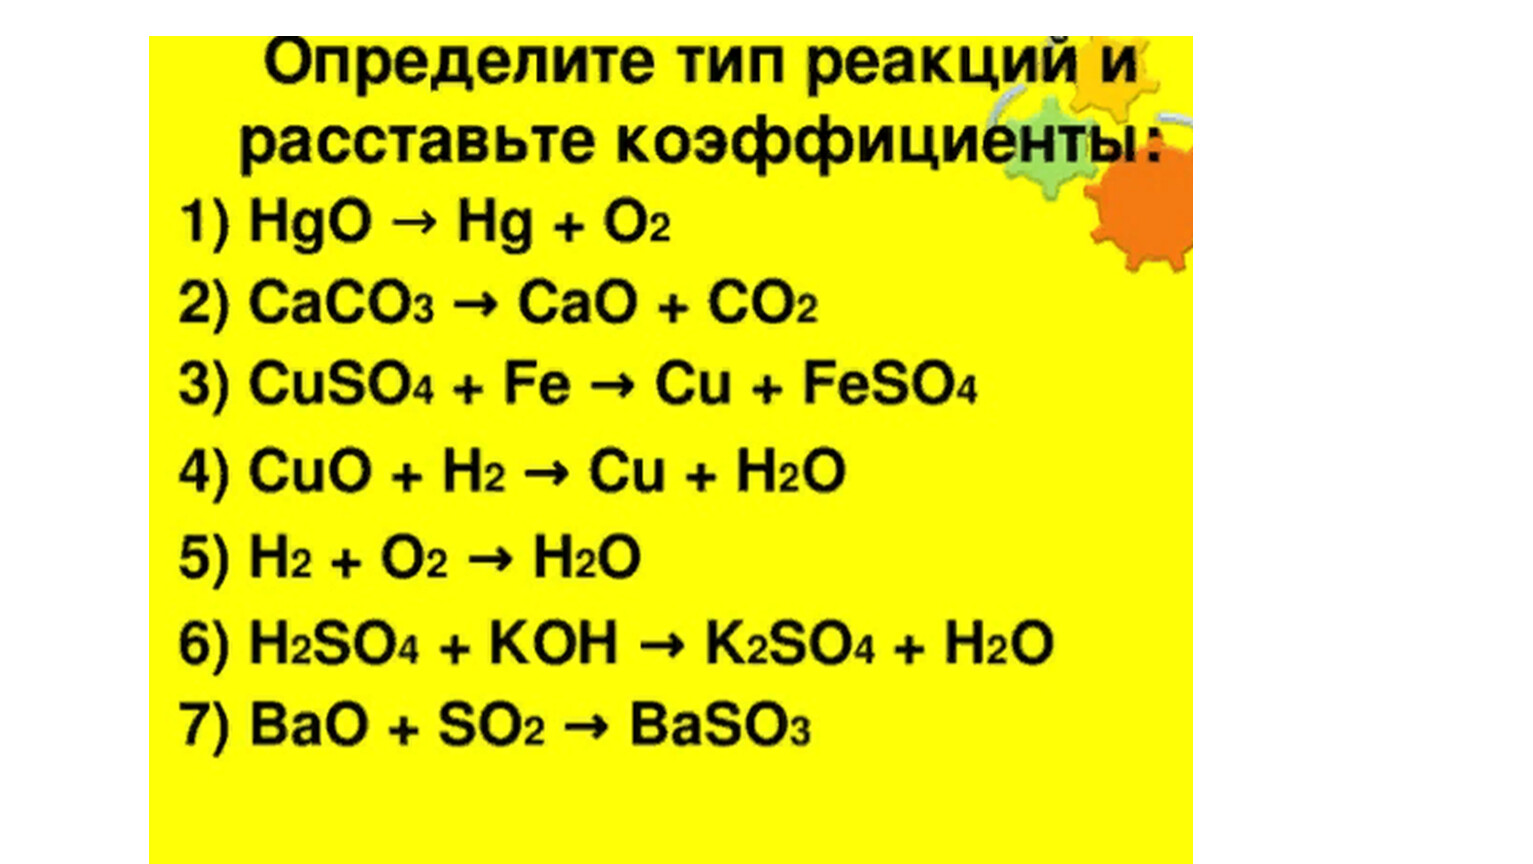 Назовите вещества caco3. Caco3 cao co2 Тип реакции. Расставьте коэффициент и определит Тип рякции. Расставить коэффициенты и определить Тип химической реакции. Расставьте коэффициенты и определите Тип химической реакции.